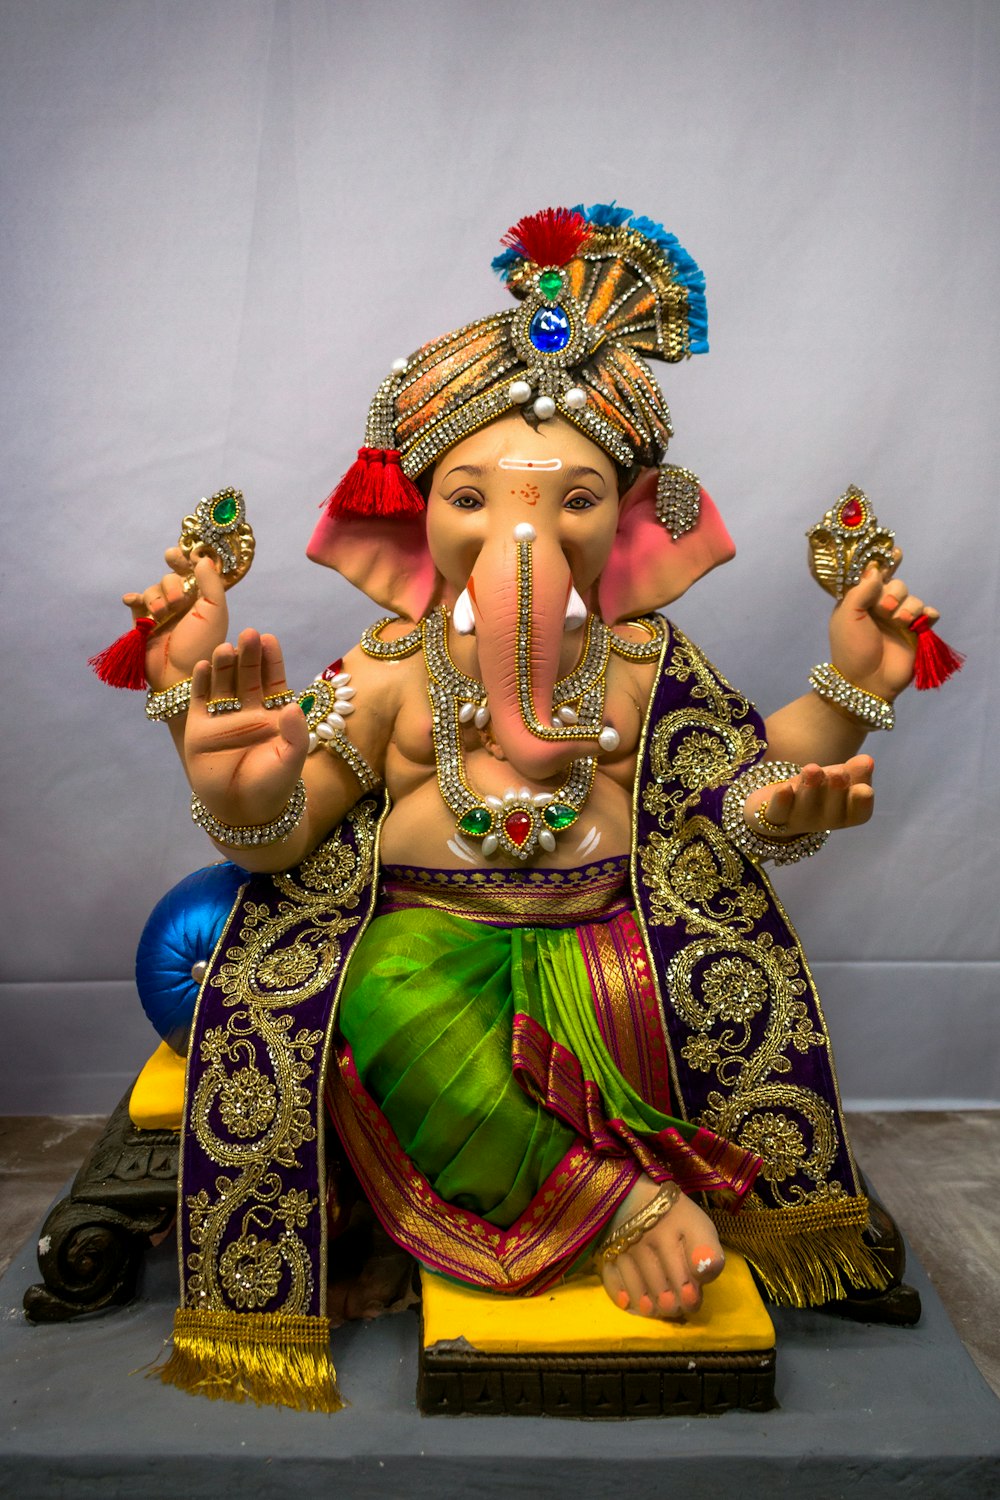 500 Ganesh Pictures Hd Download Free Images On Unsplash